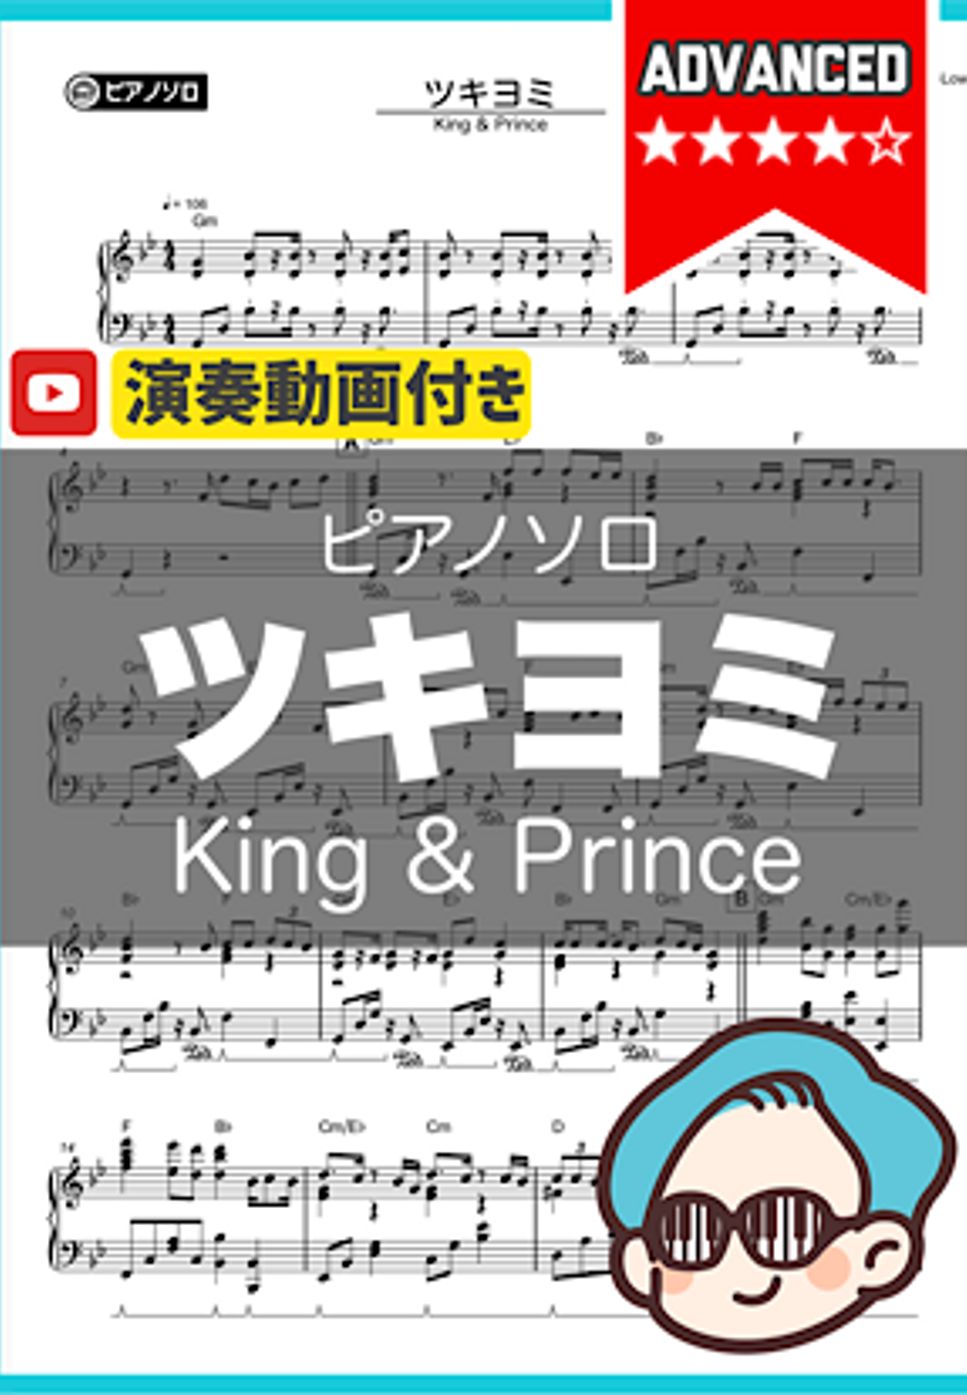 King & Prince - ツキヨミ by シータピアノ